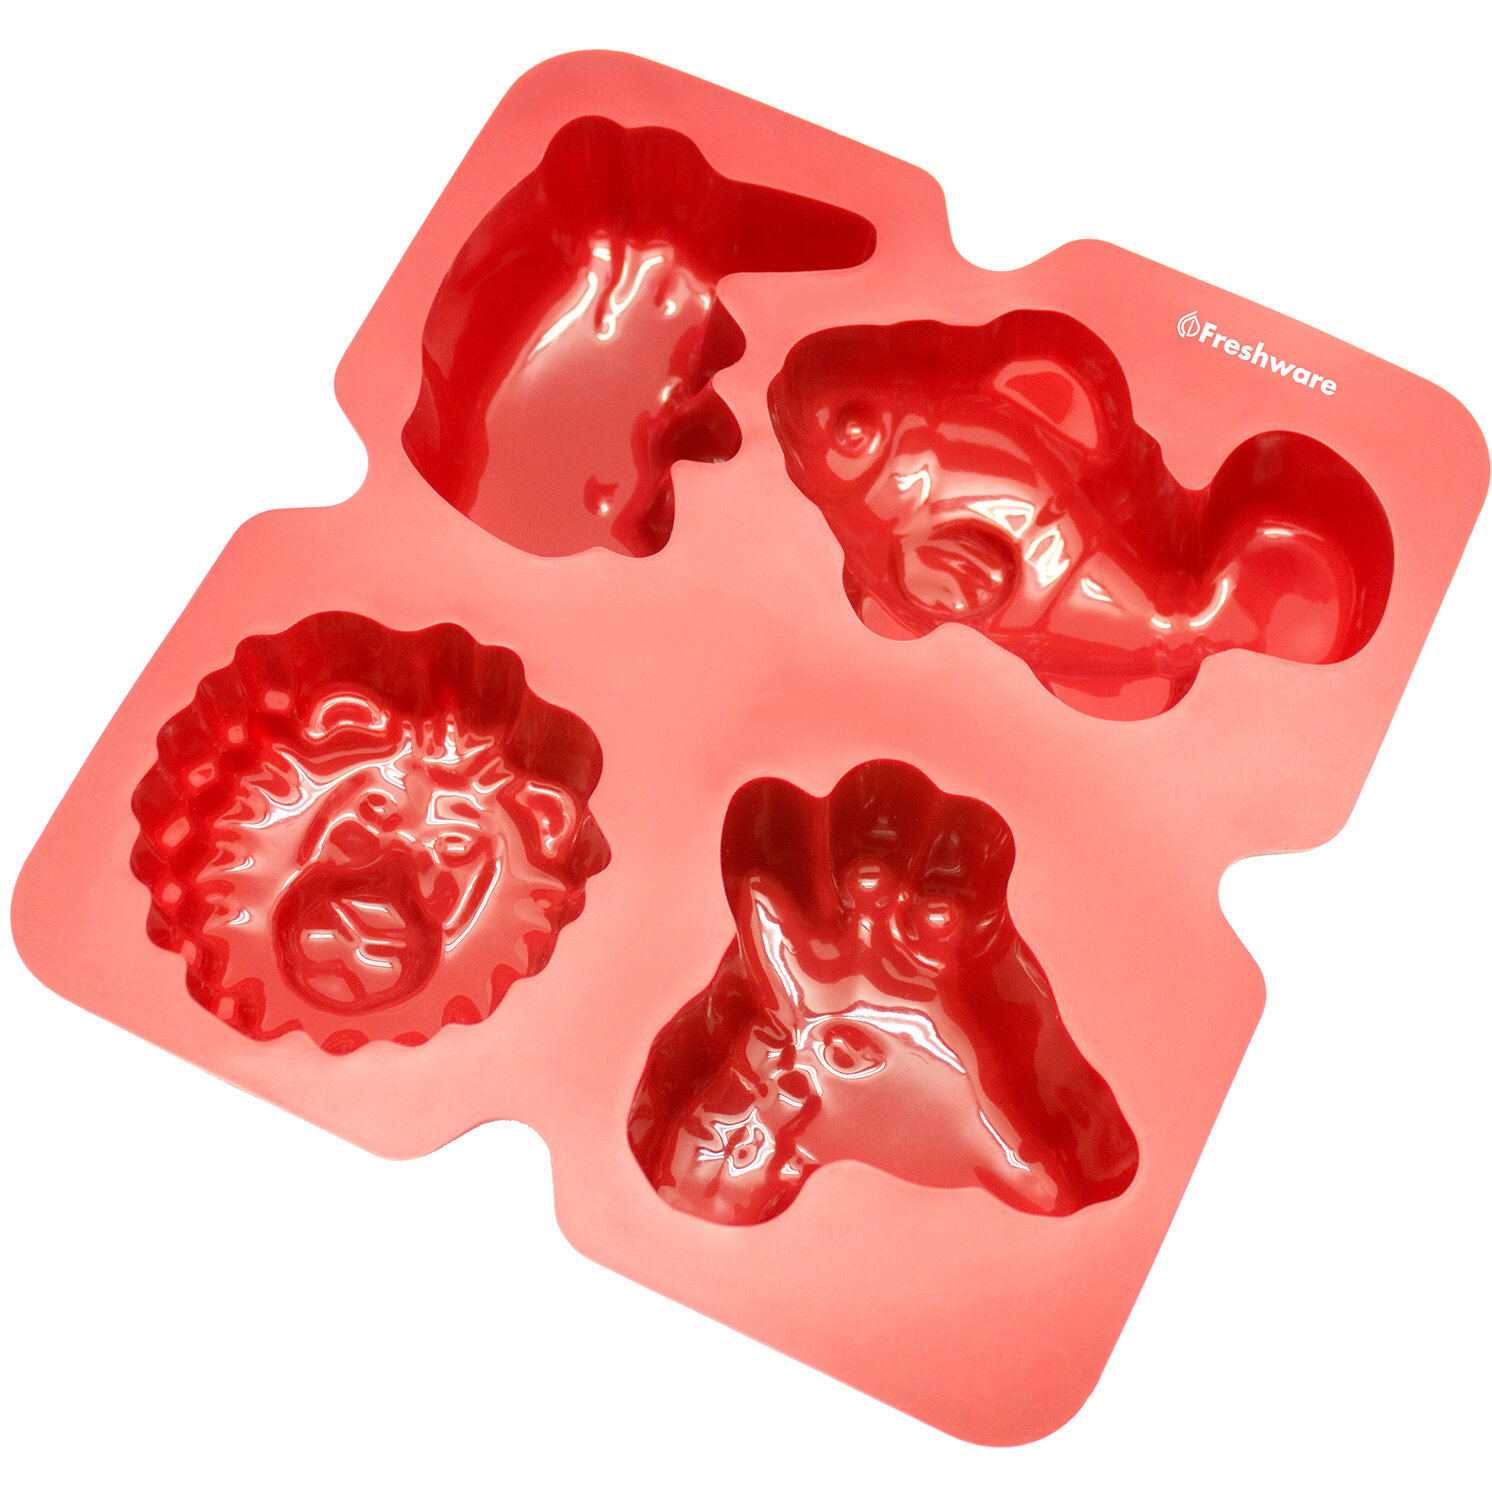 Silicone Gummy Bear Mold Creative Bear Shape Candy Mold With